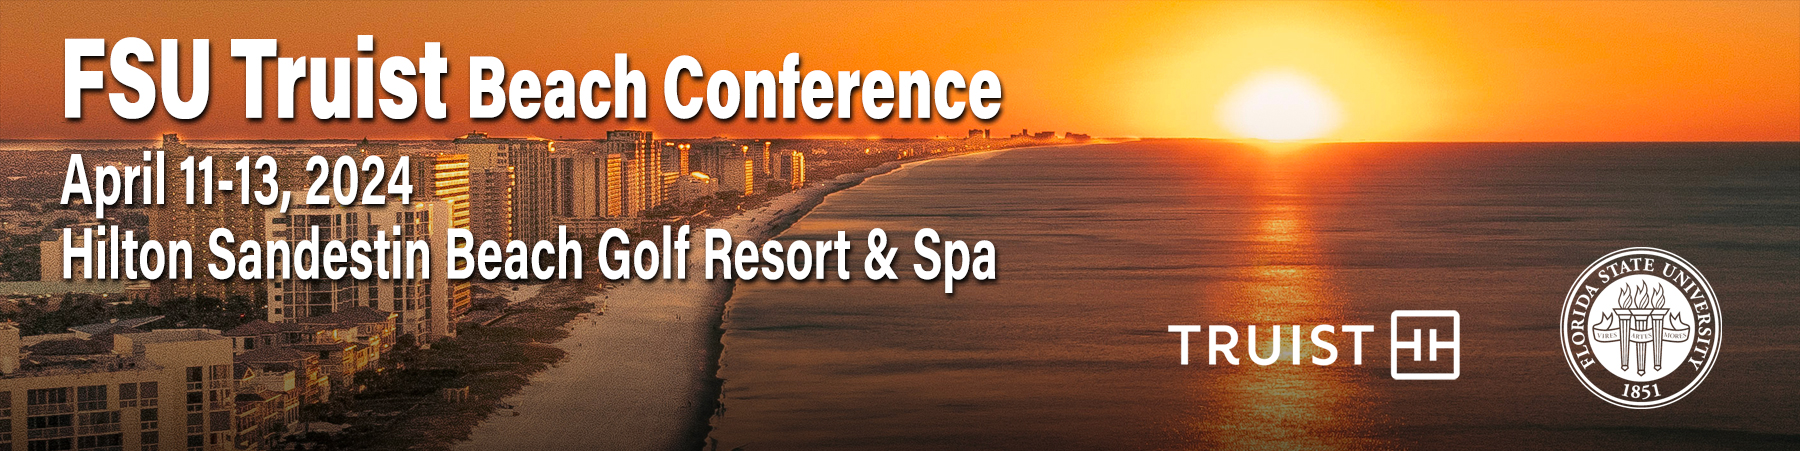 FSU Truist Beach Conference